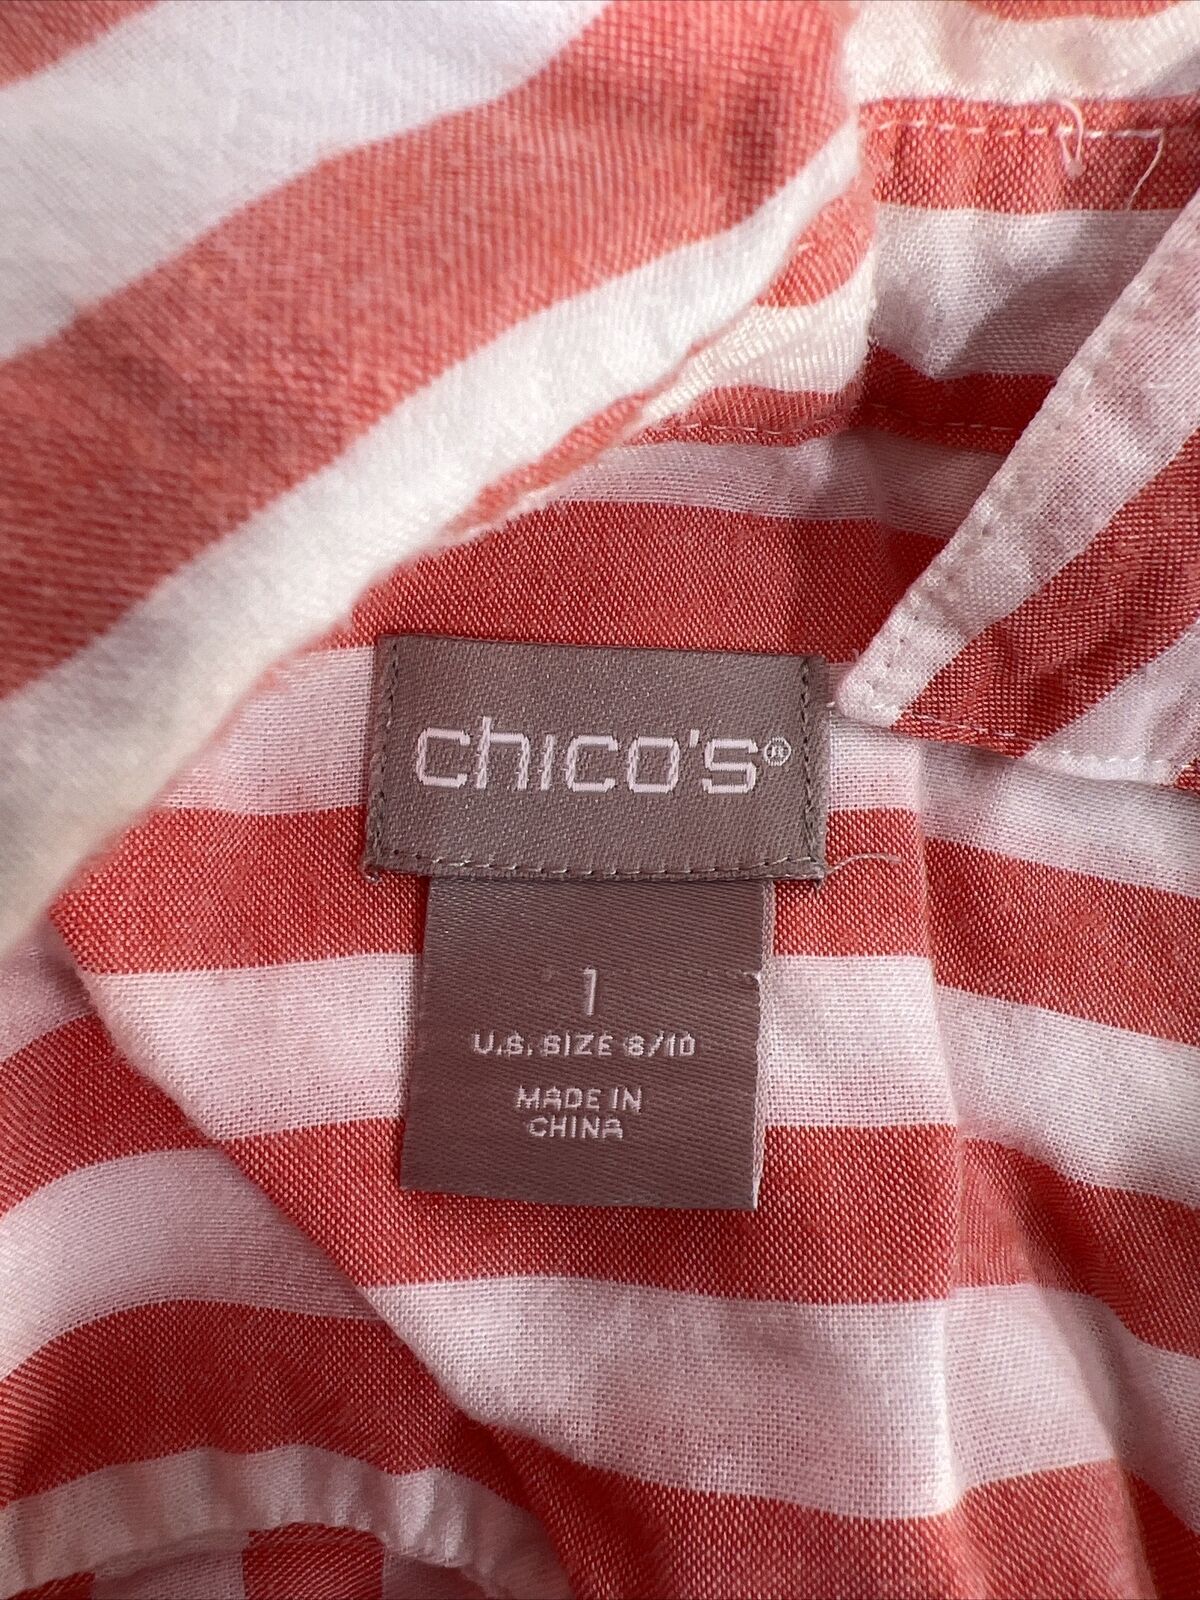 Chico's Camisa tipo túnica de manga larga con botones, color naranja, a rayas, para mujer - 1/US 8